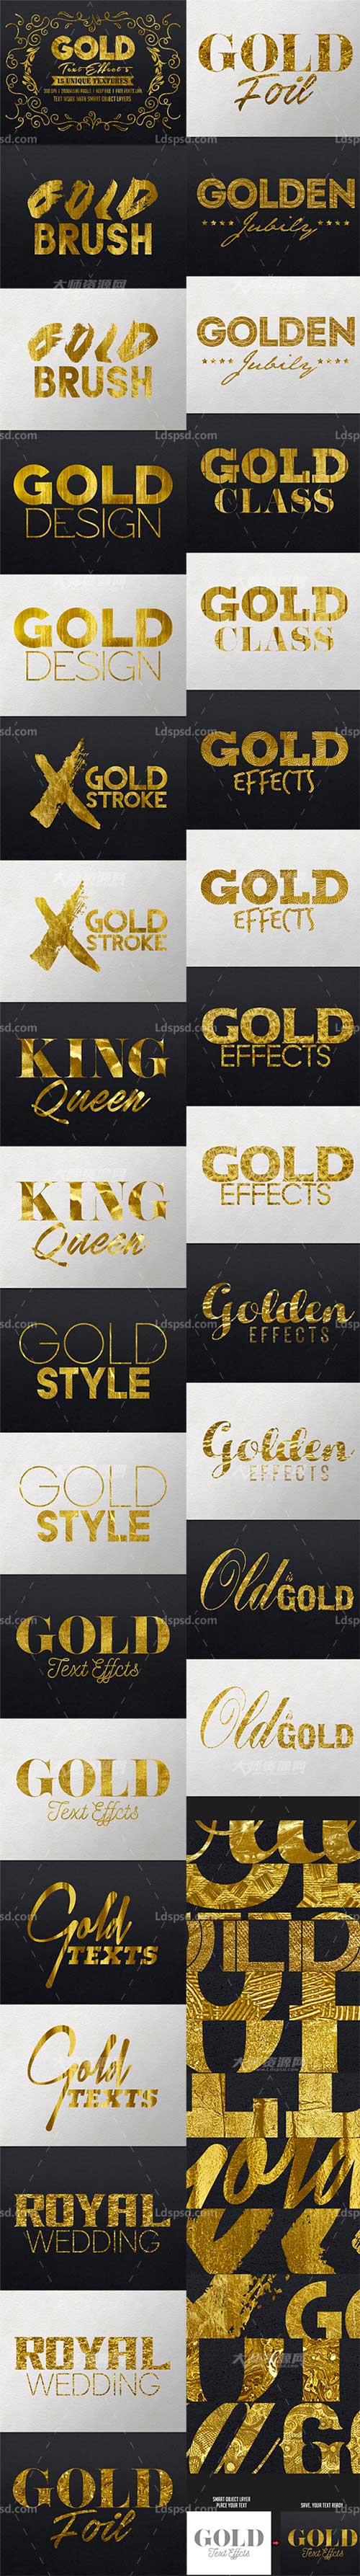 Gold Text Effects,15个极品的烫金文字模板(PSD源文件)